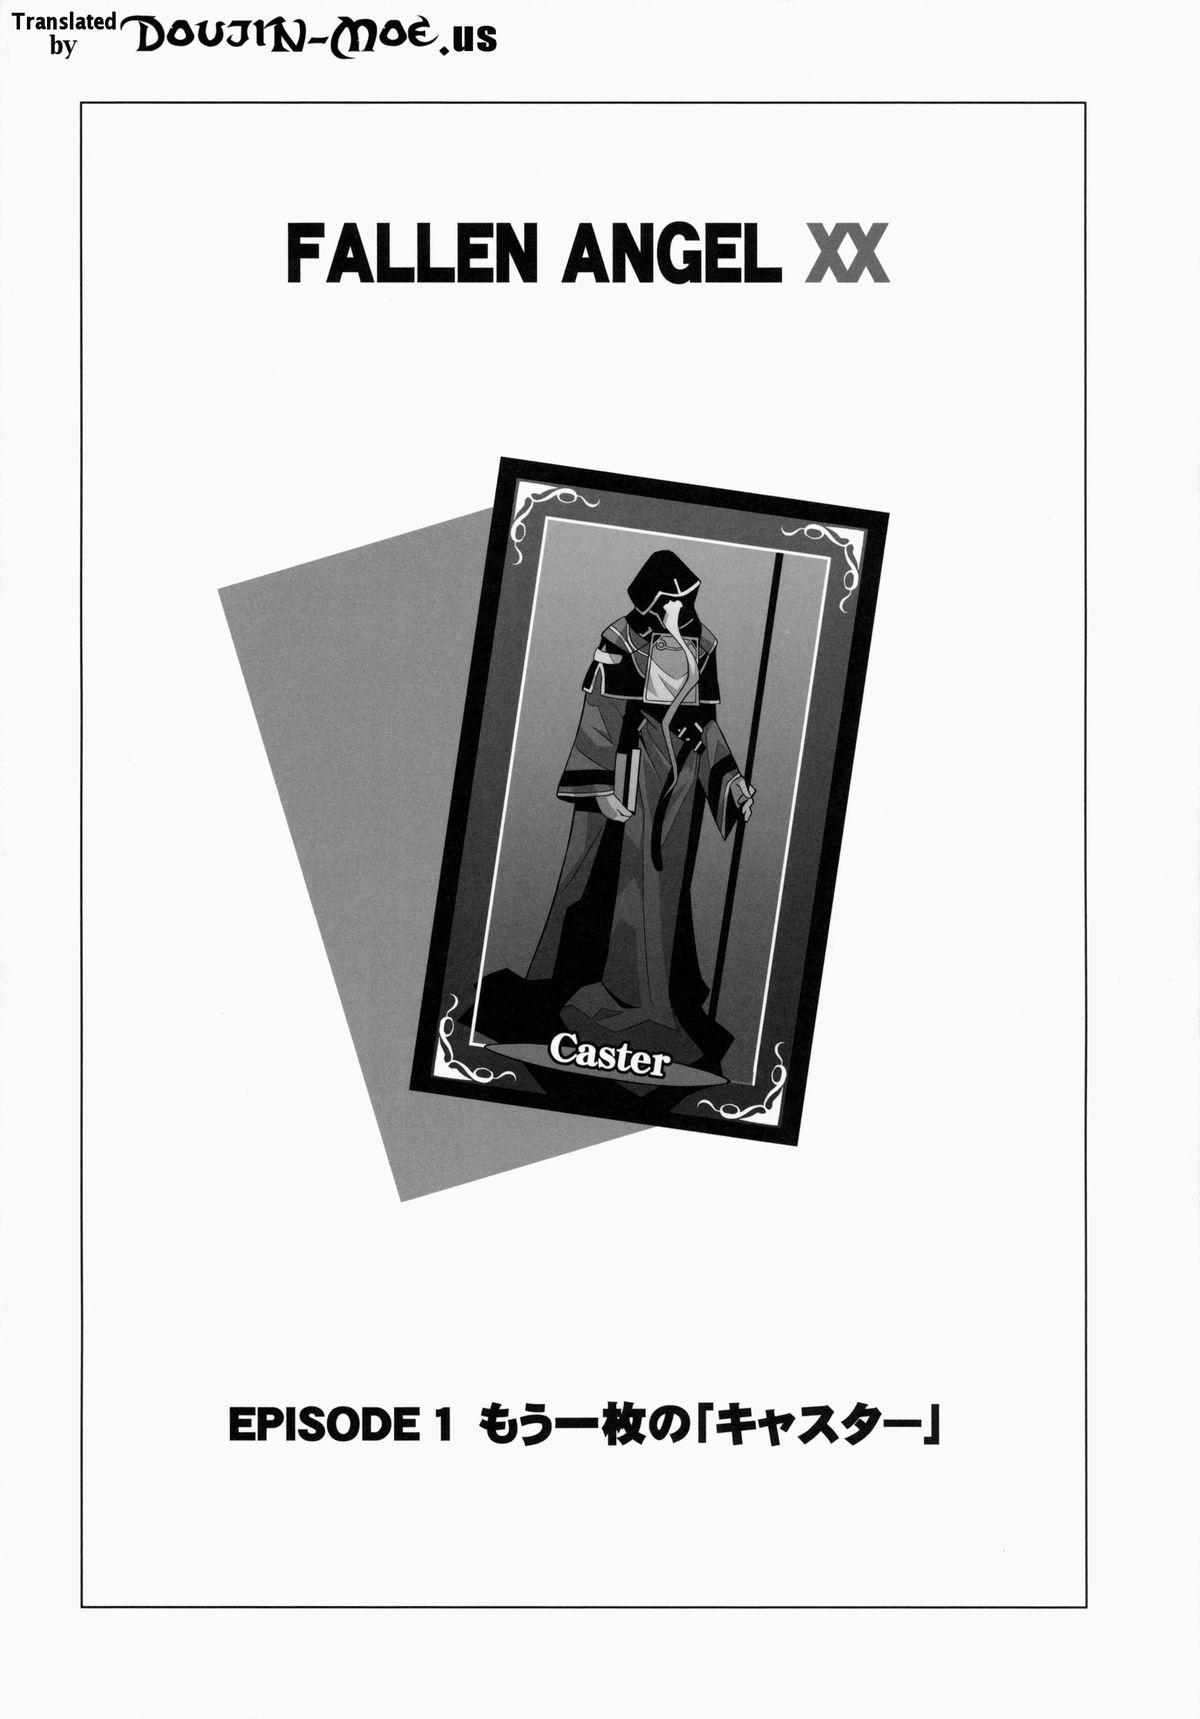 Datenshi XX EPISODE 1 | Fallen Angel XX EPISODE 1 2